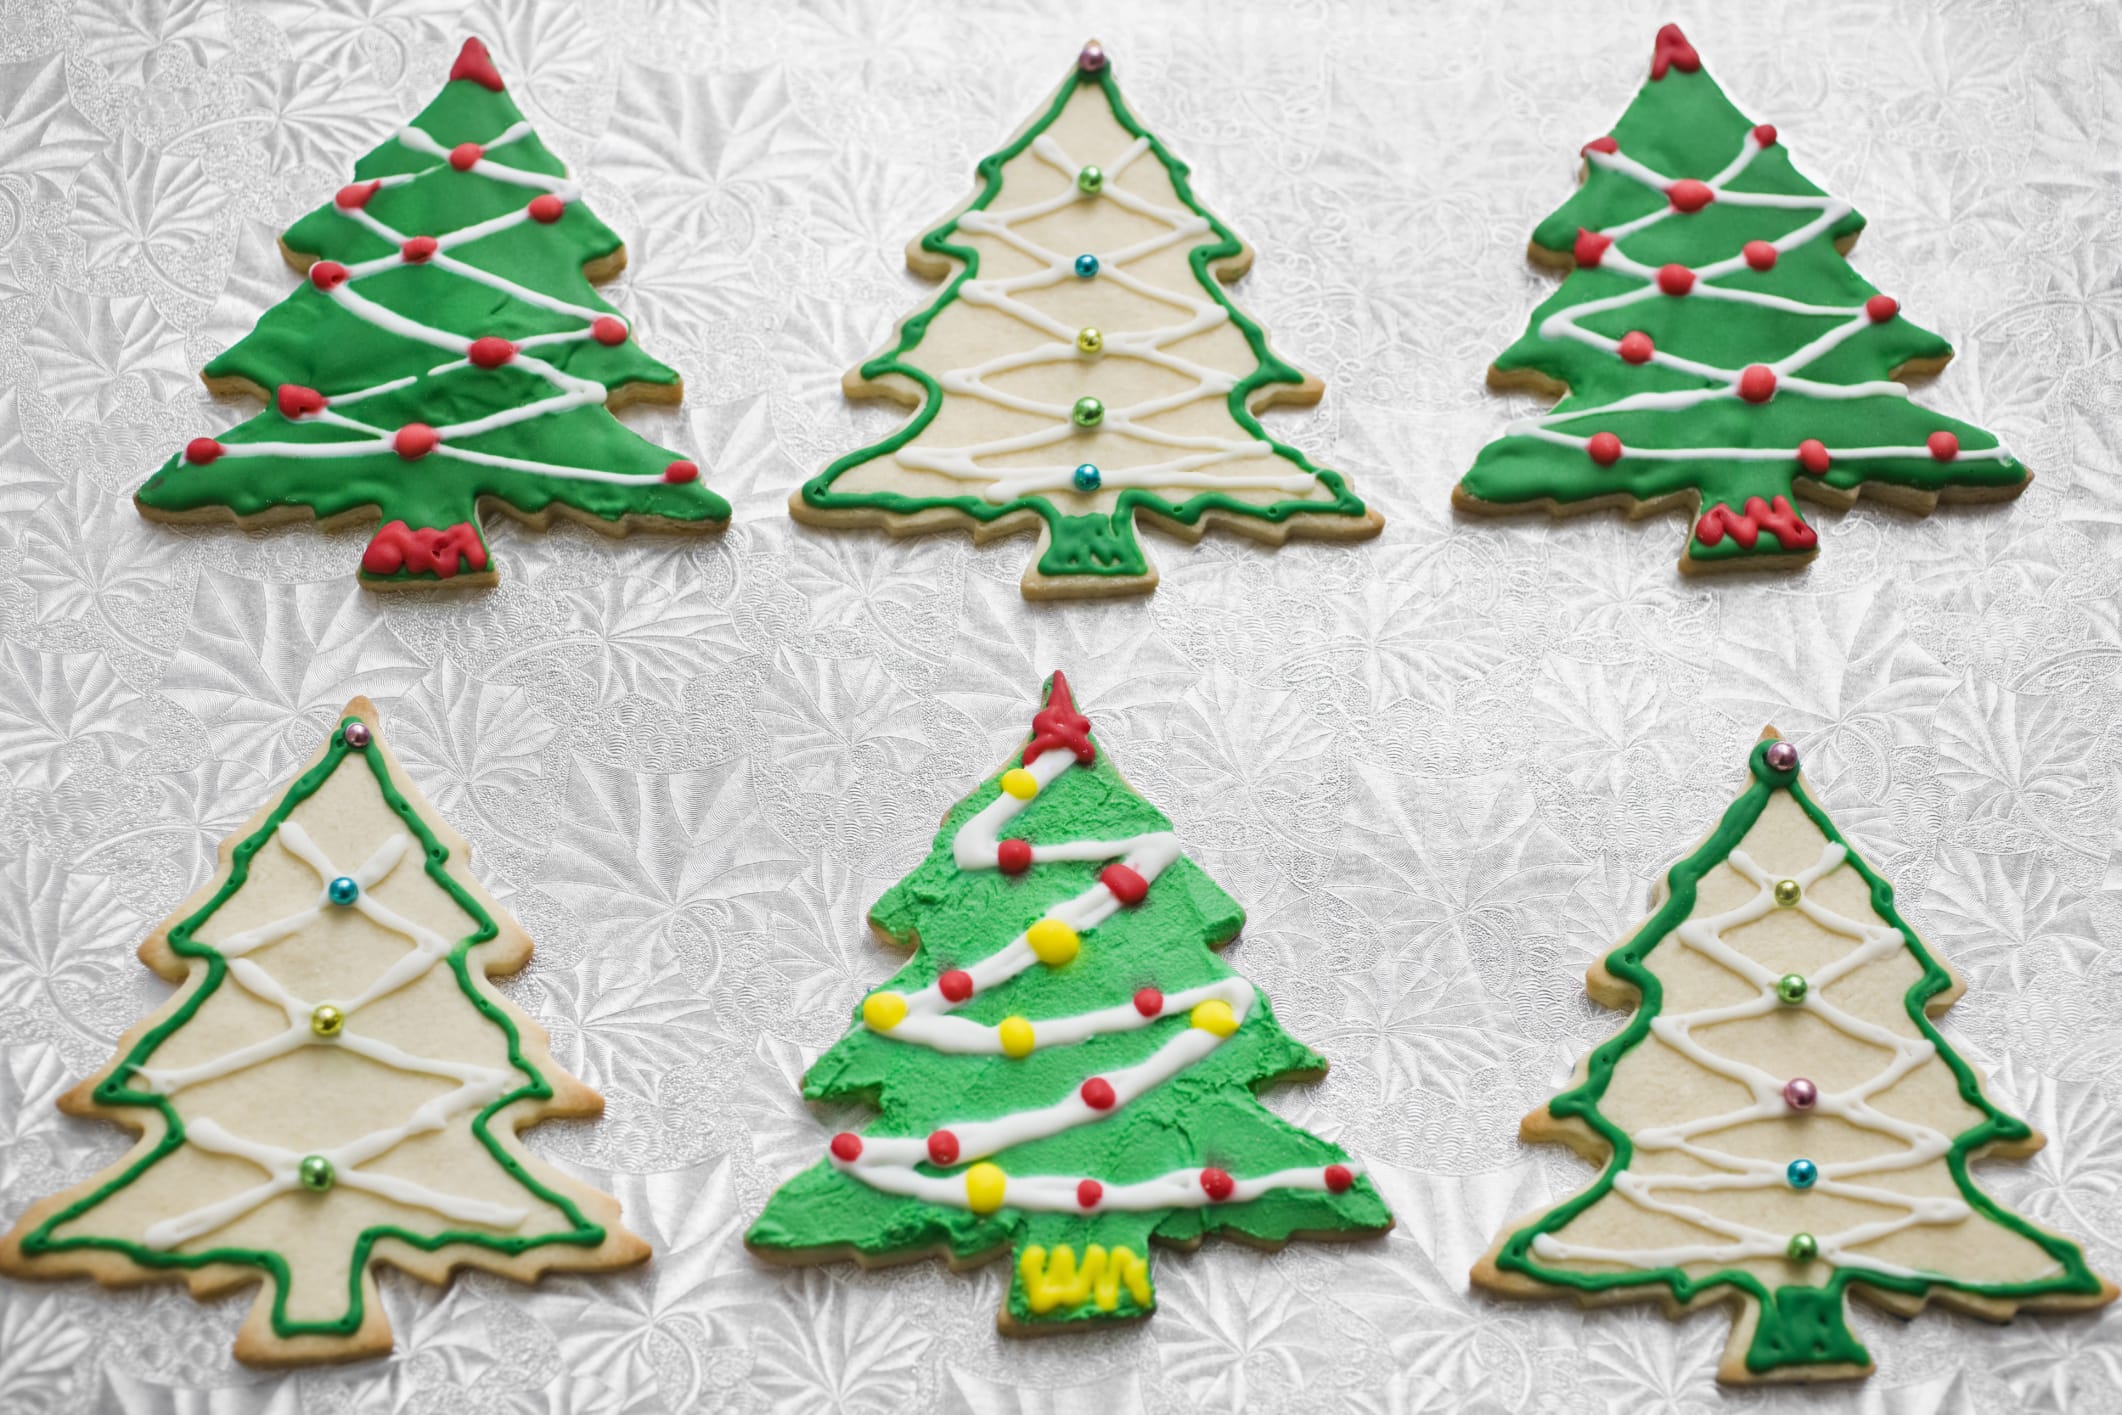 Biscotti Albero Di Natale Fai Da Te.Regali Di Natale Fai Da Te I Biscotti Di Pasta Frolla Con La Glassa